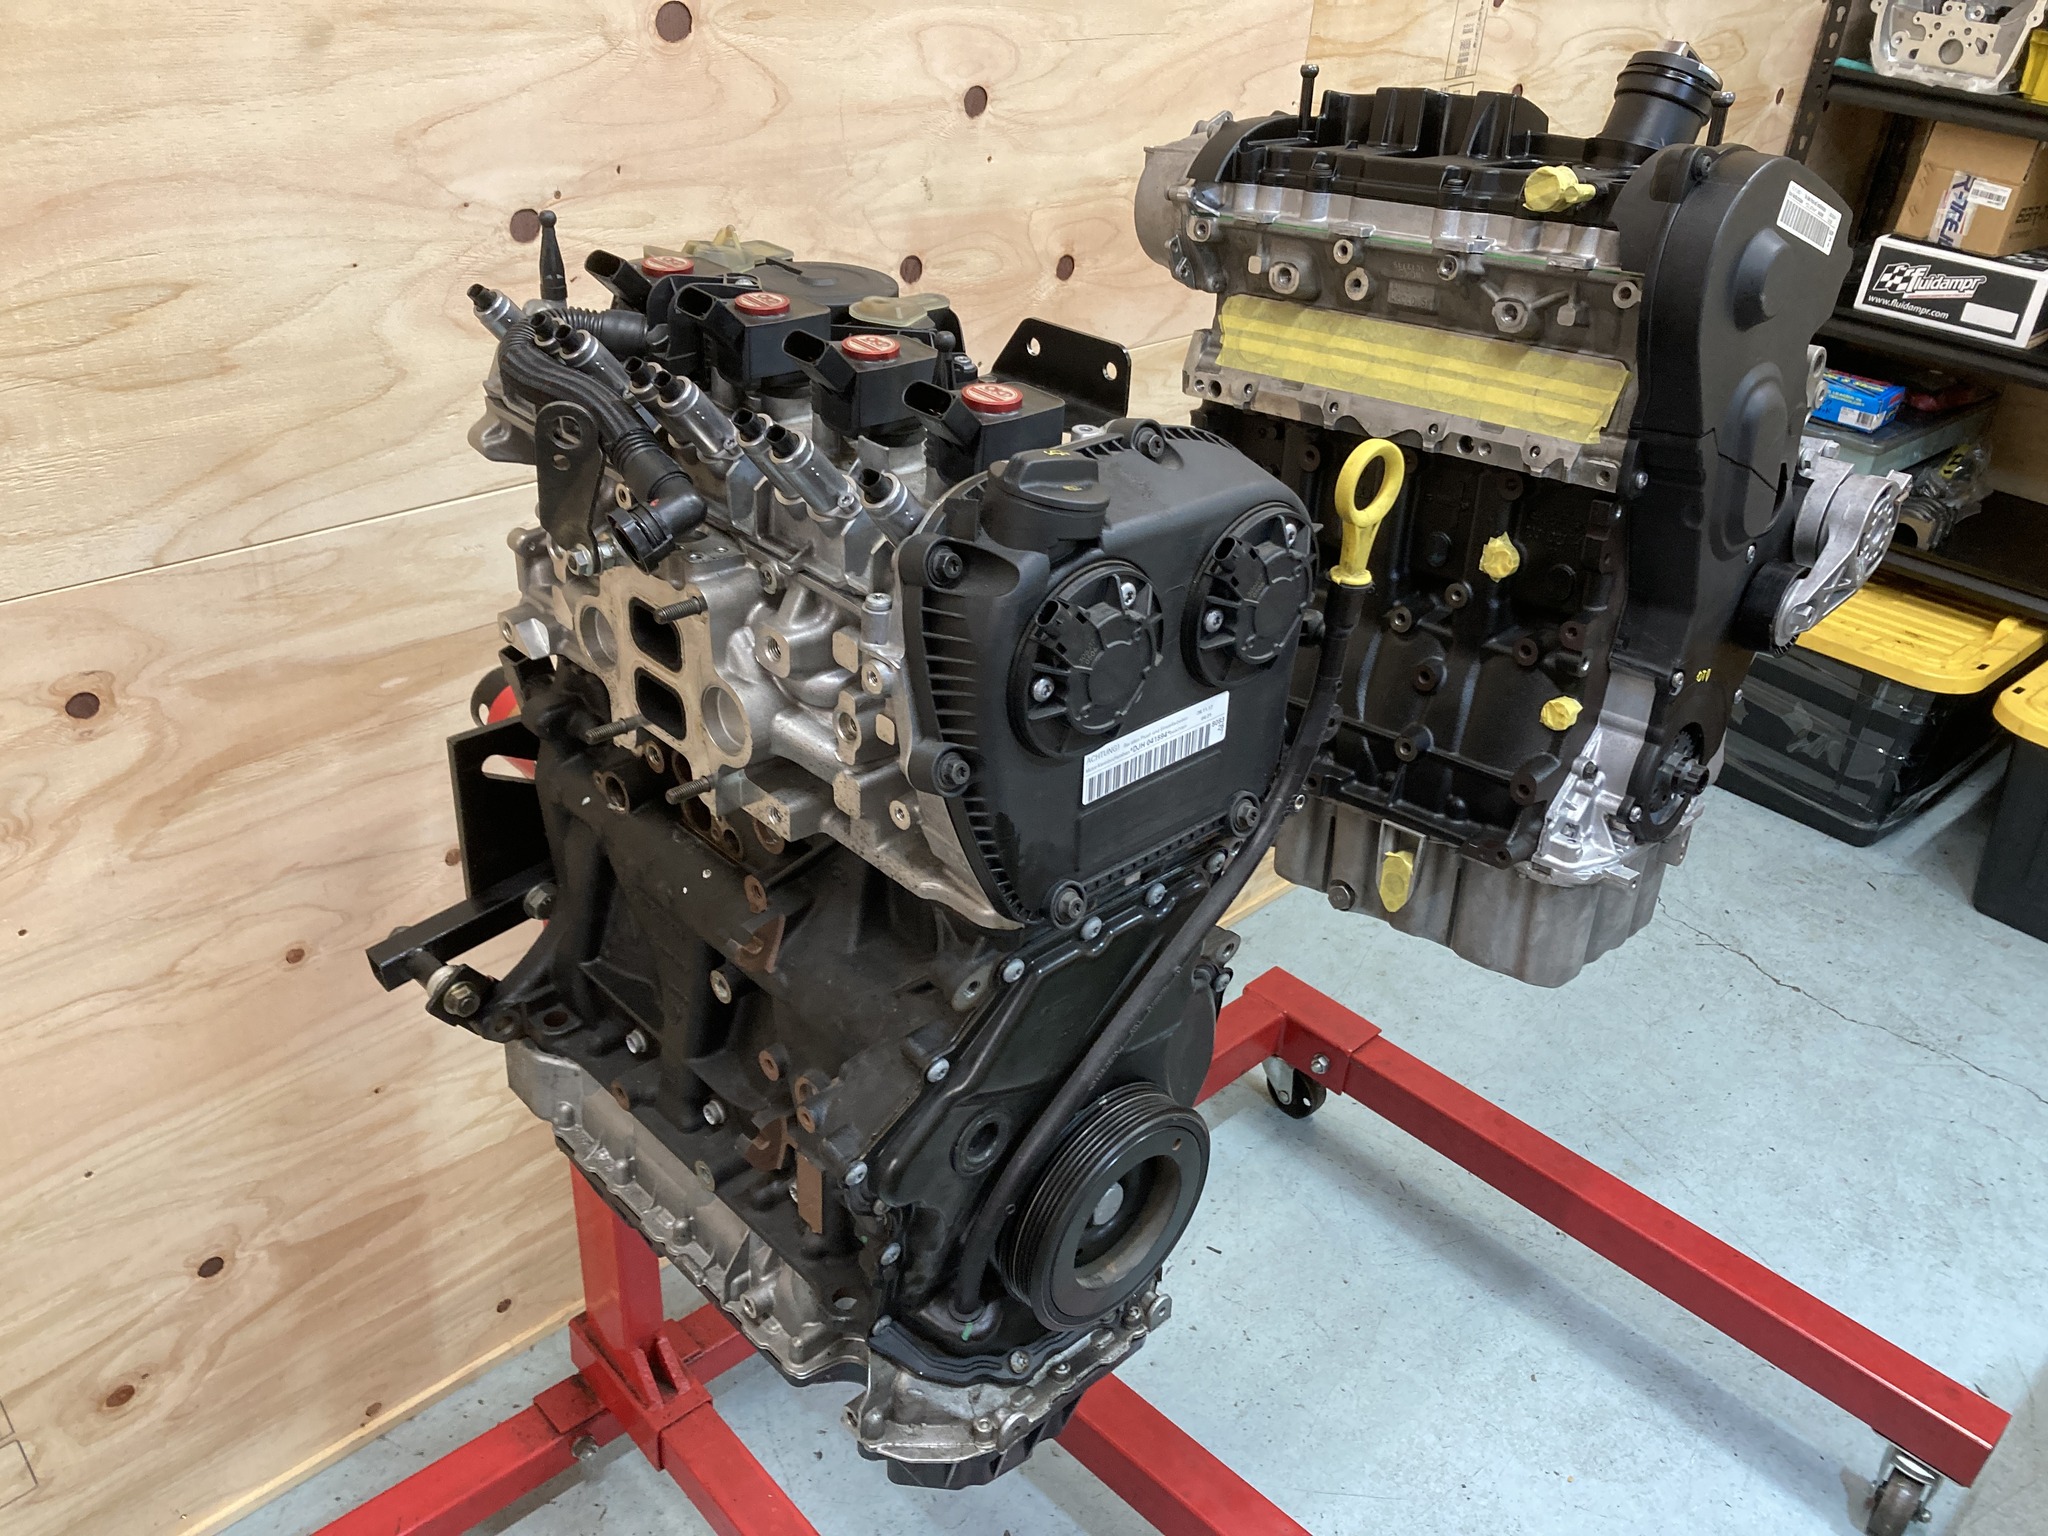 VW系EA113エンジン完成なので、次はEA888エンジンをバラします。